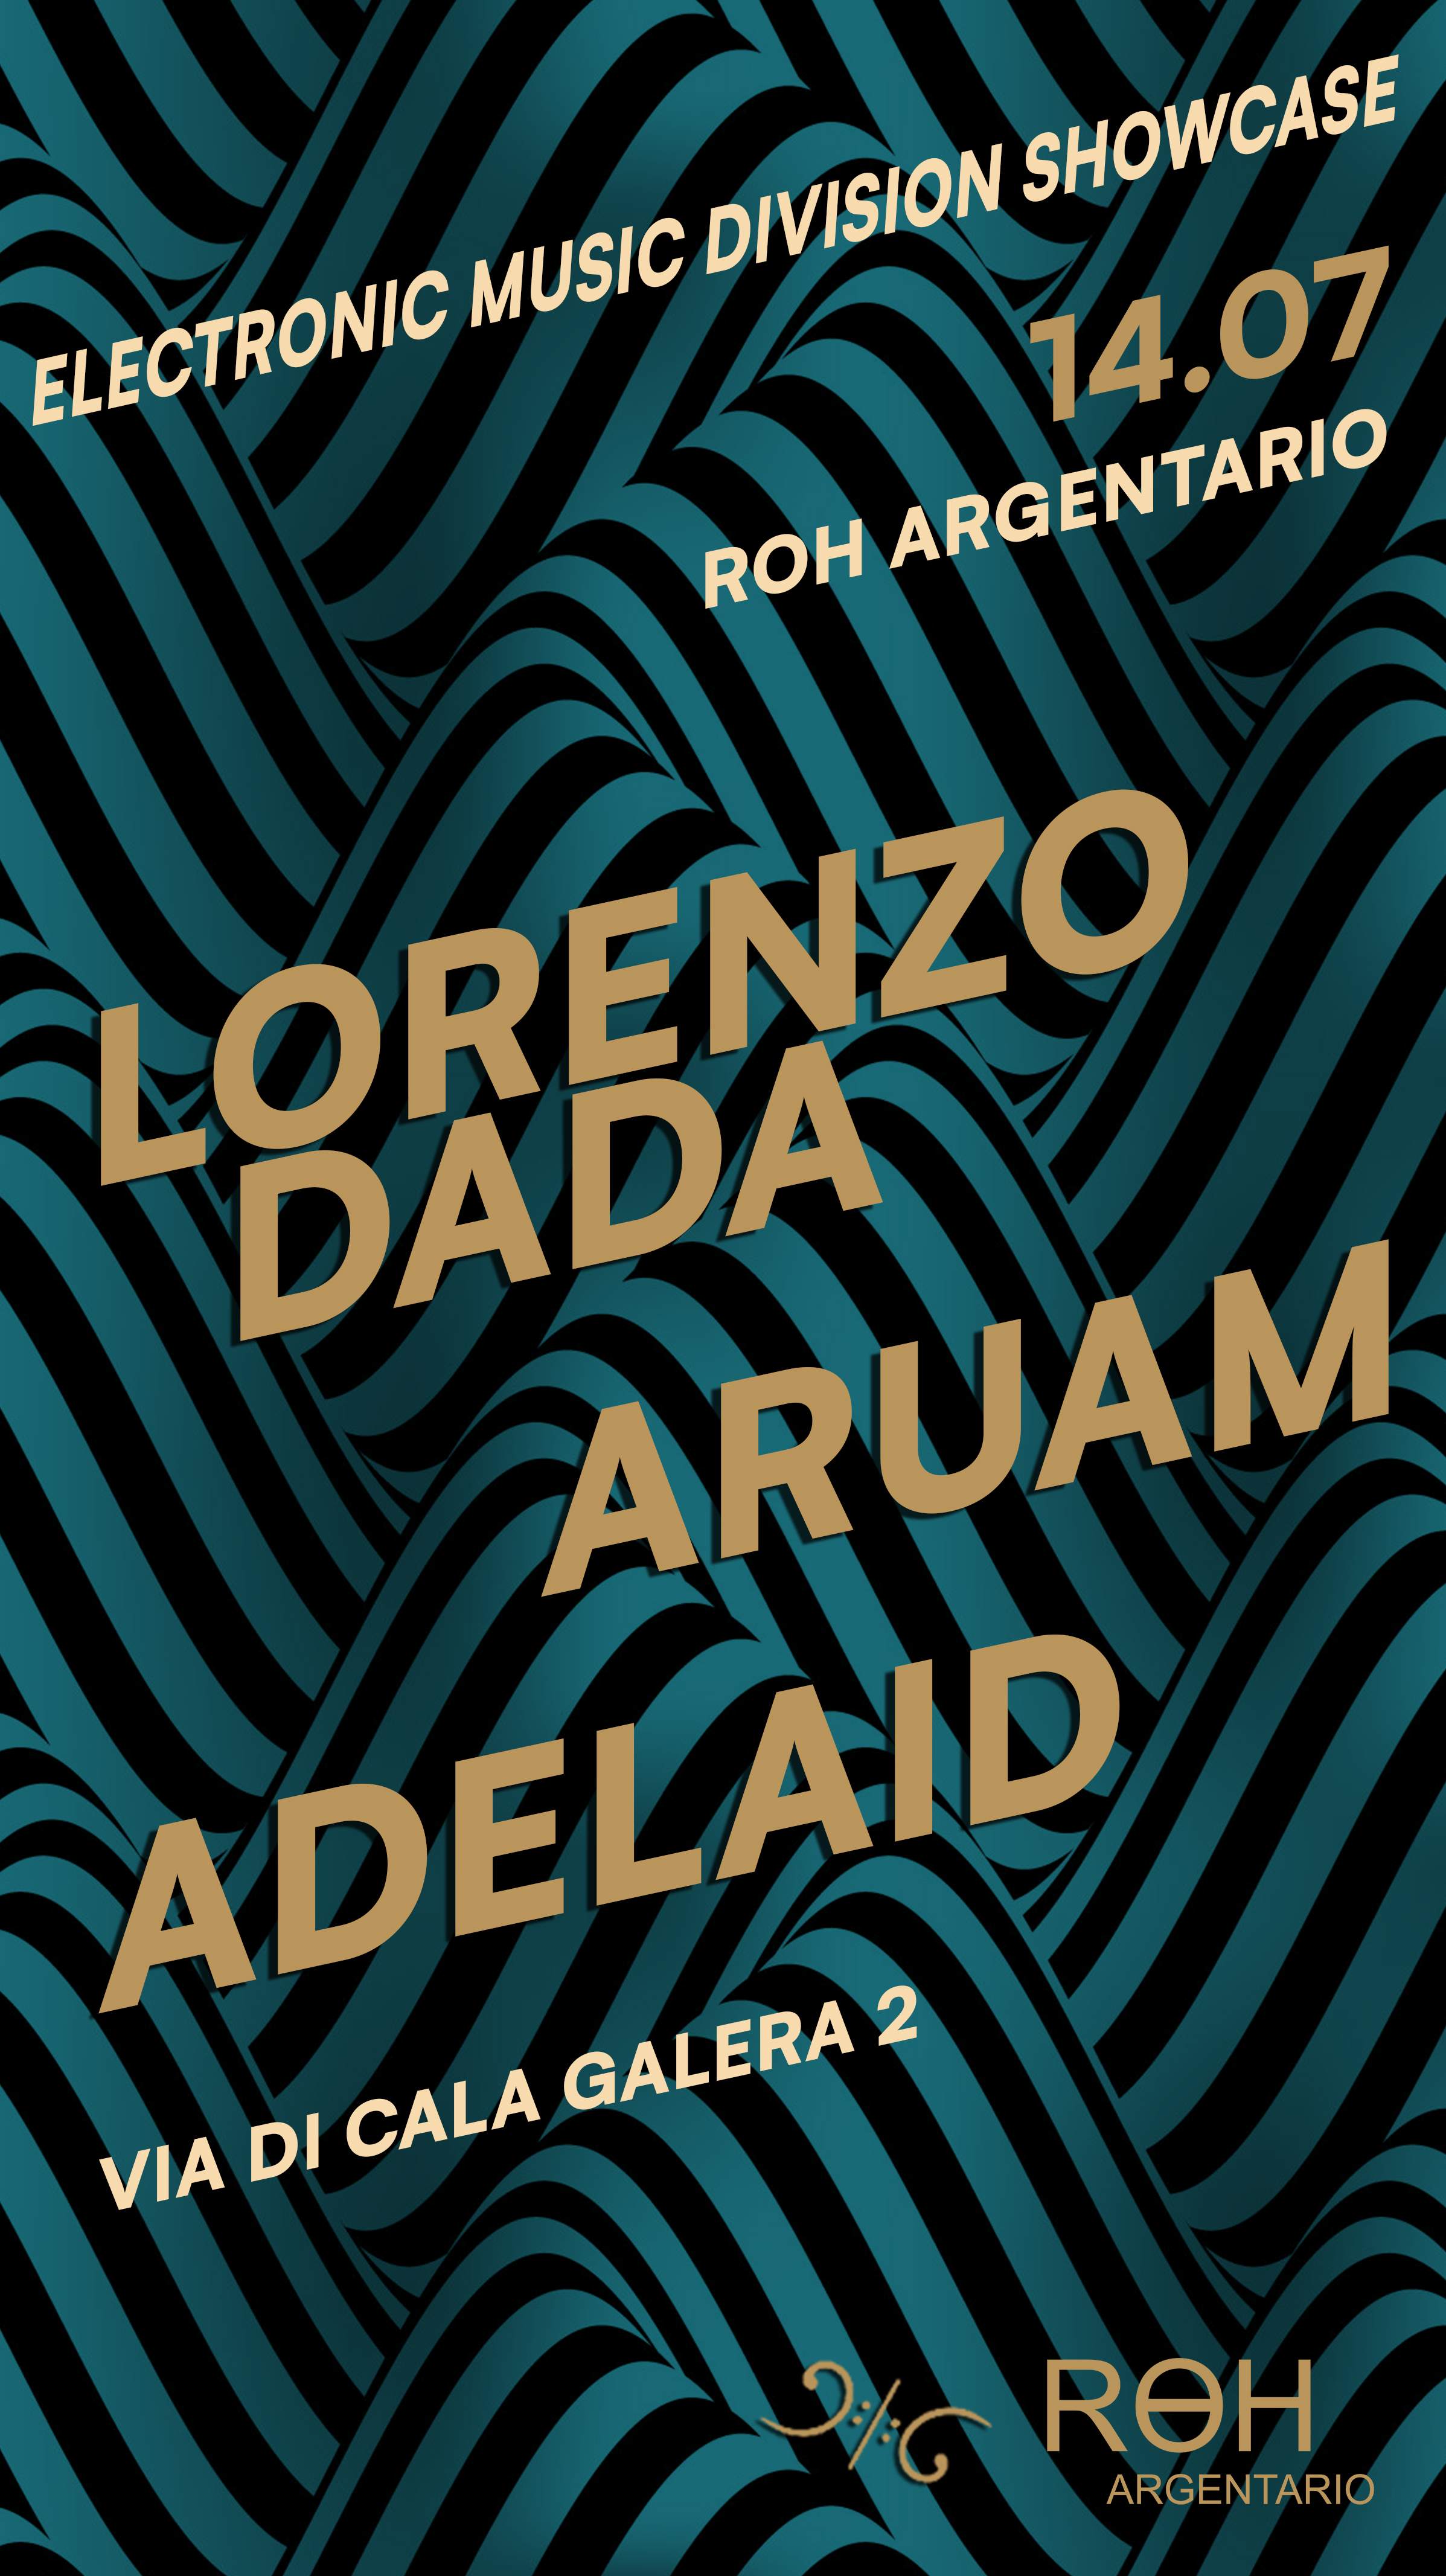 Electronic Music Division Showcase: Lorenzo Dada, Aruam, Adelaid - フライヤー表